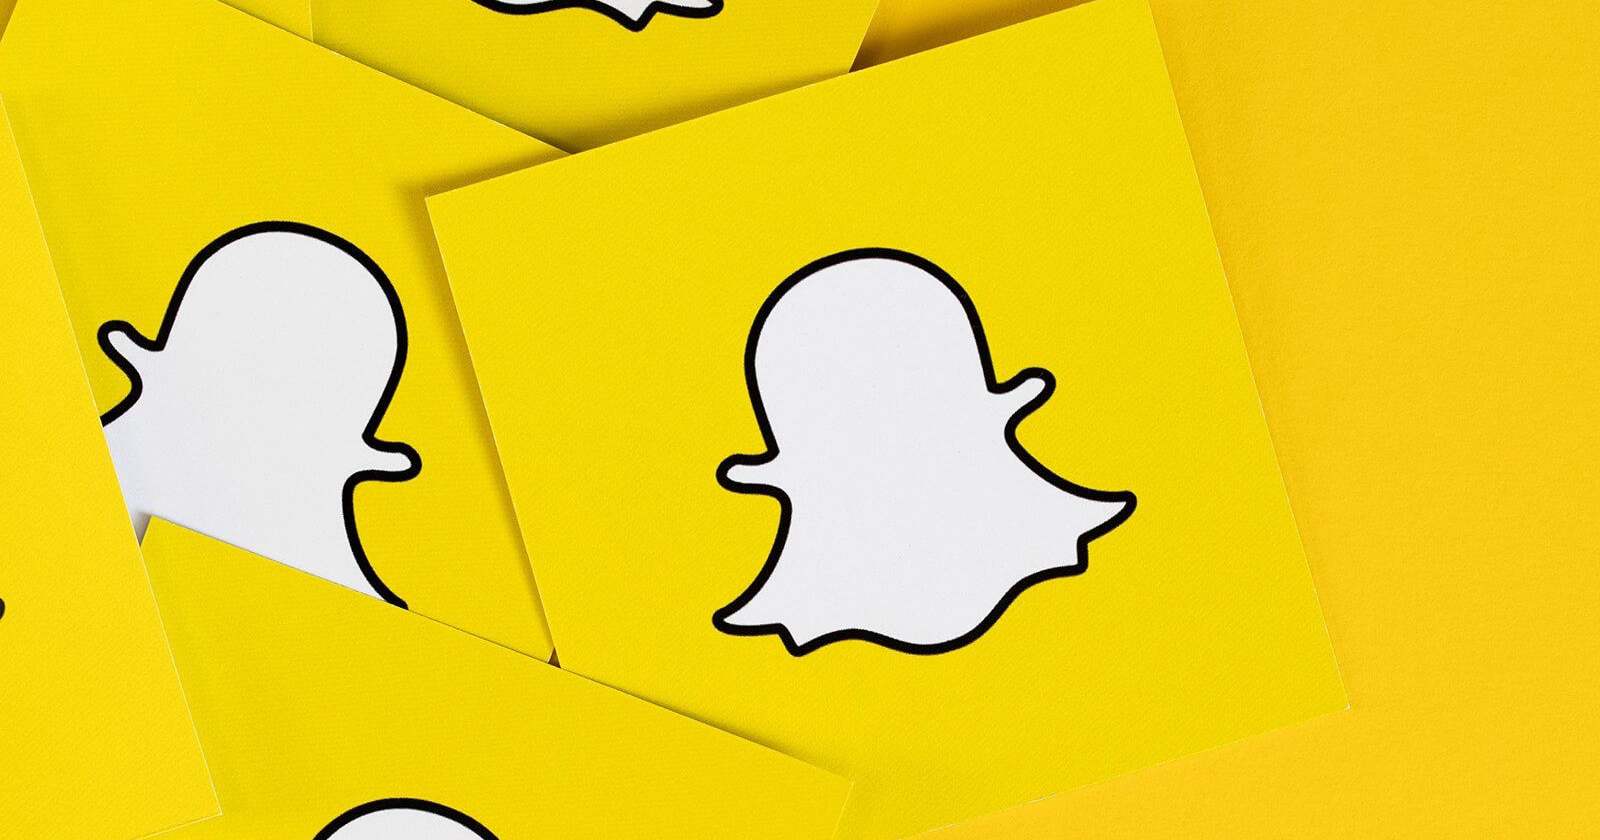 Snapchat  Snapchat icon, Snapchat logo, Yellow snapchat